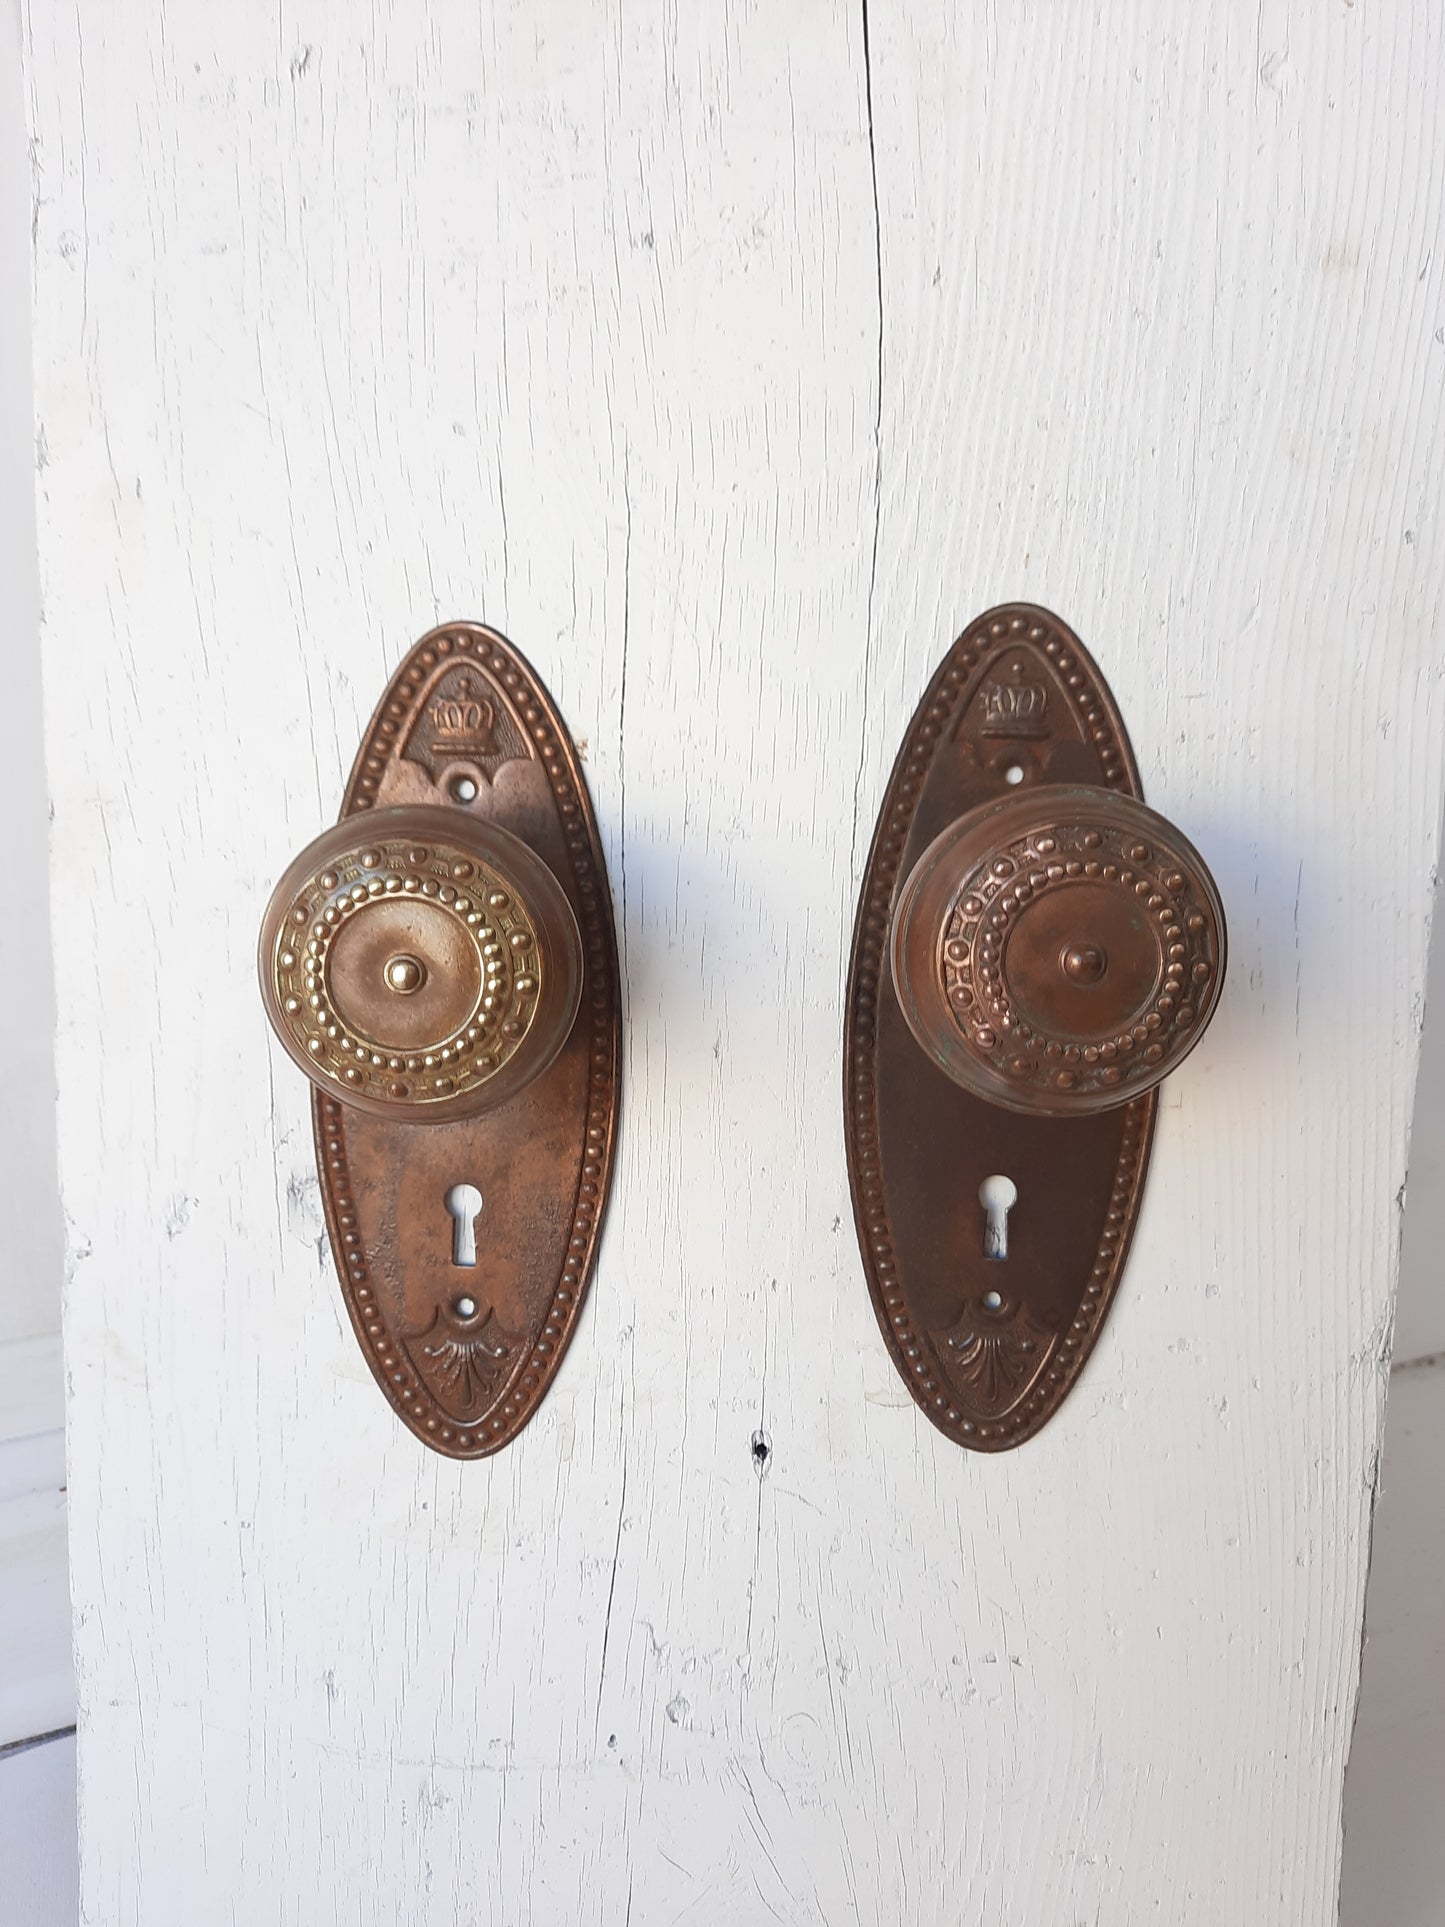 Antique Oval Backplates with Crown and Beaded Brass Doorknobs, Crown Design Door Hardware in Antique Bronze 120705